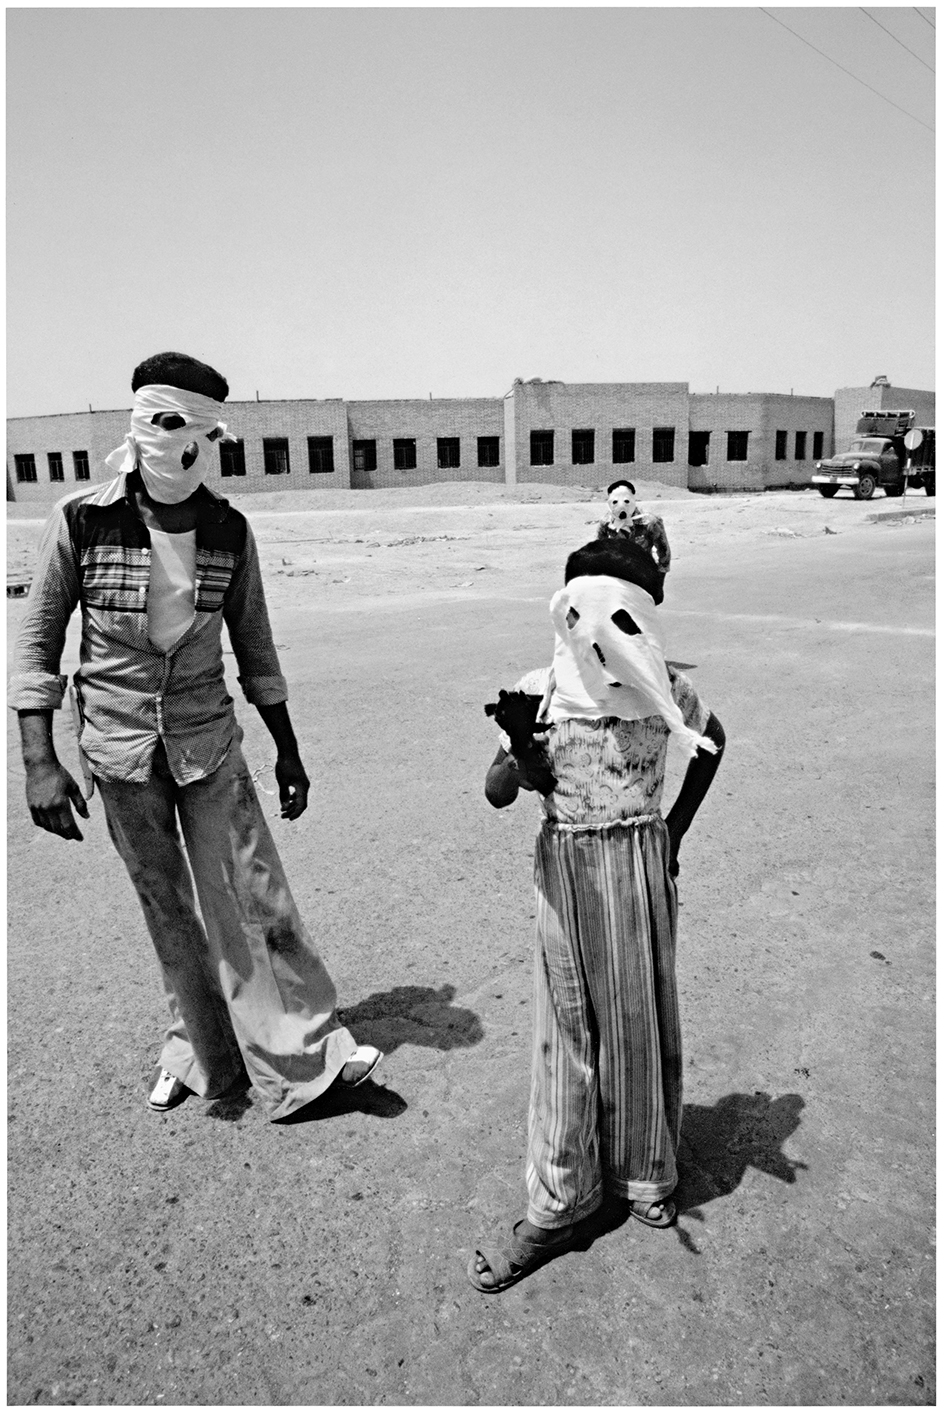 &#169Christine Spengler - Iran, 1989.